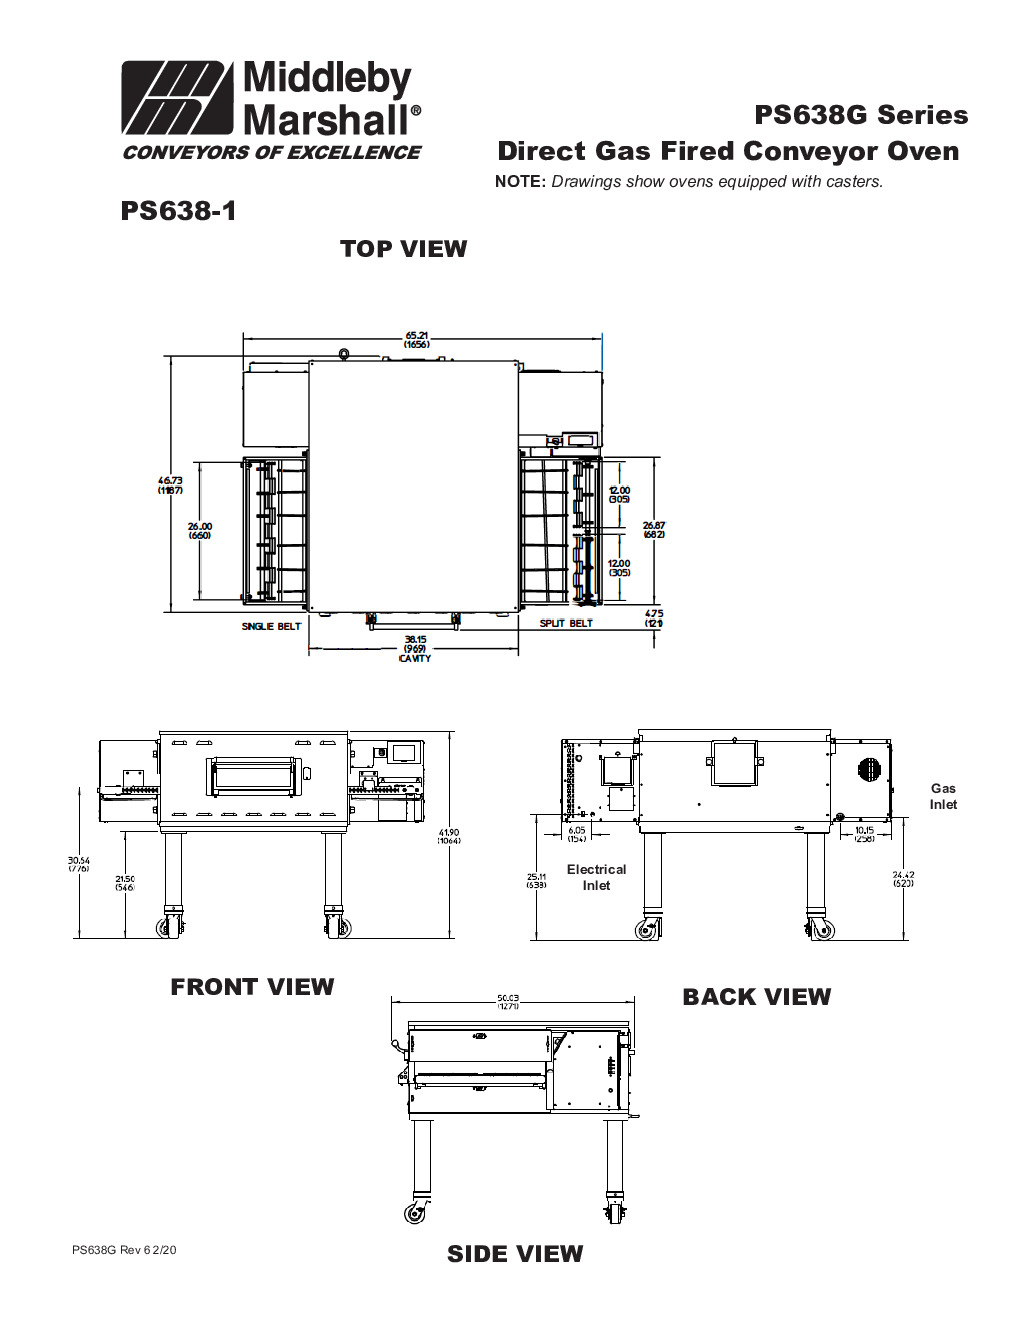 Middleby Marshall PS638G-3 Conveyor Gas Oven